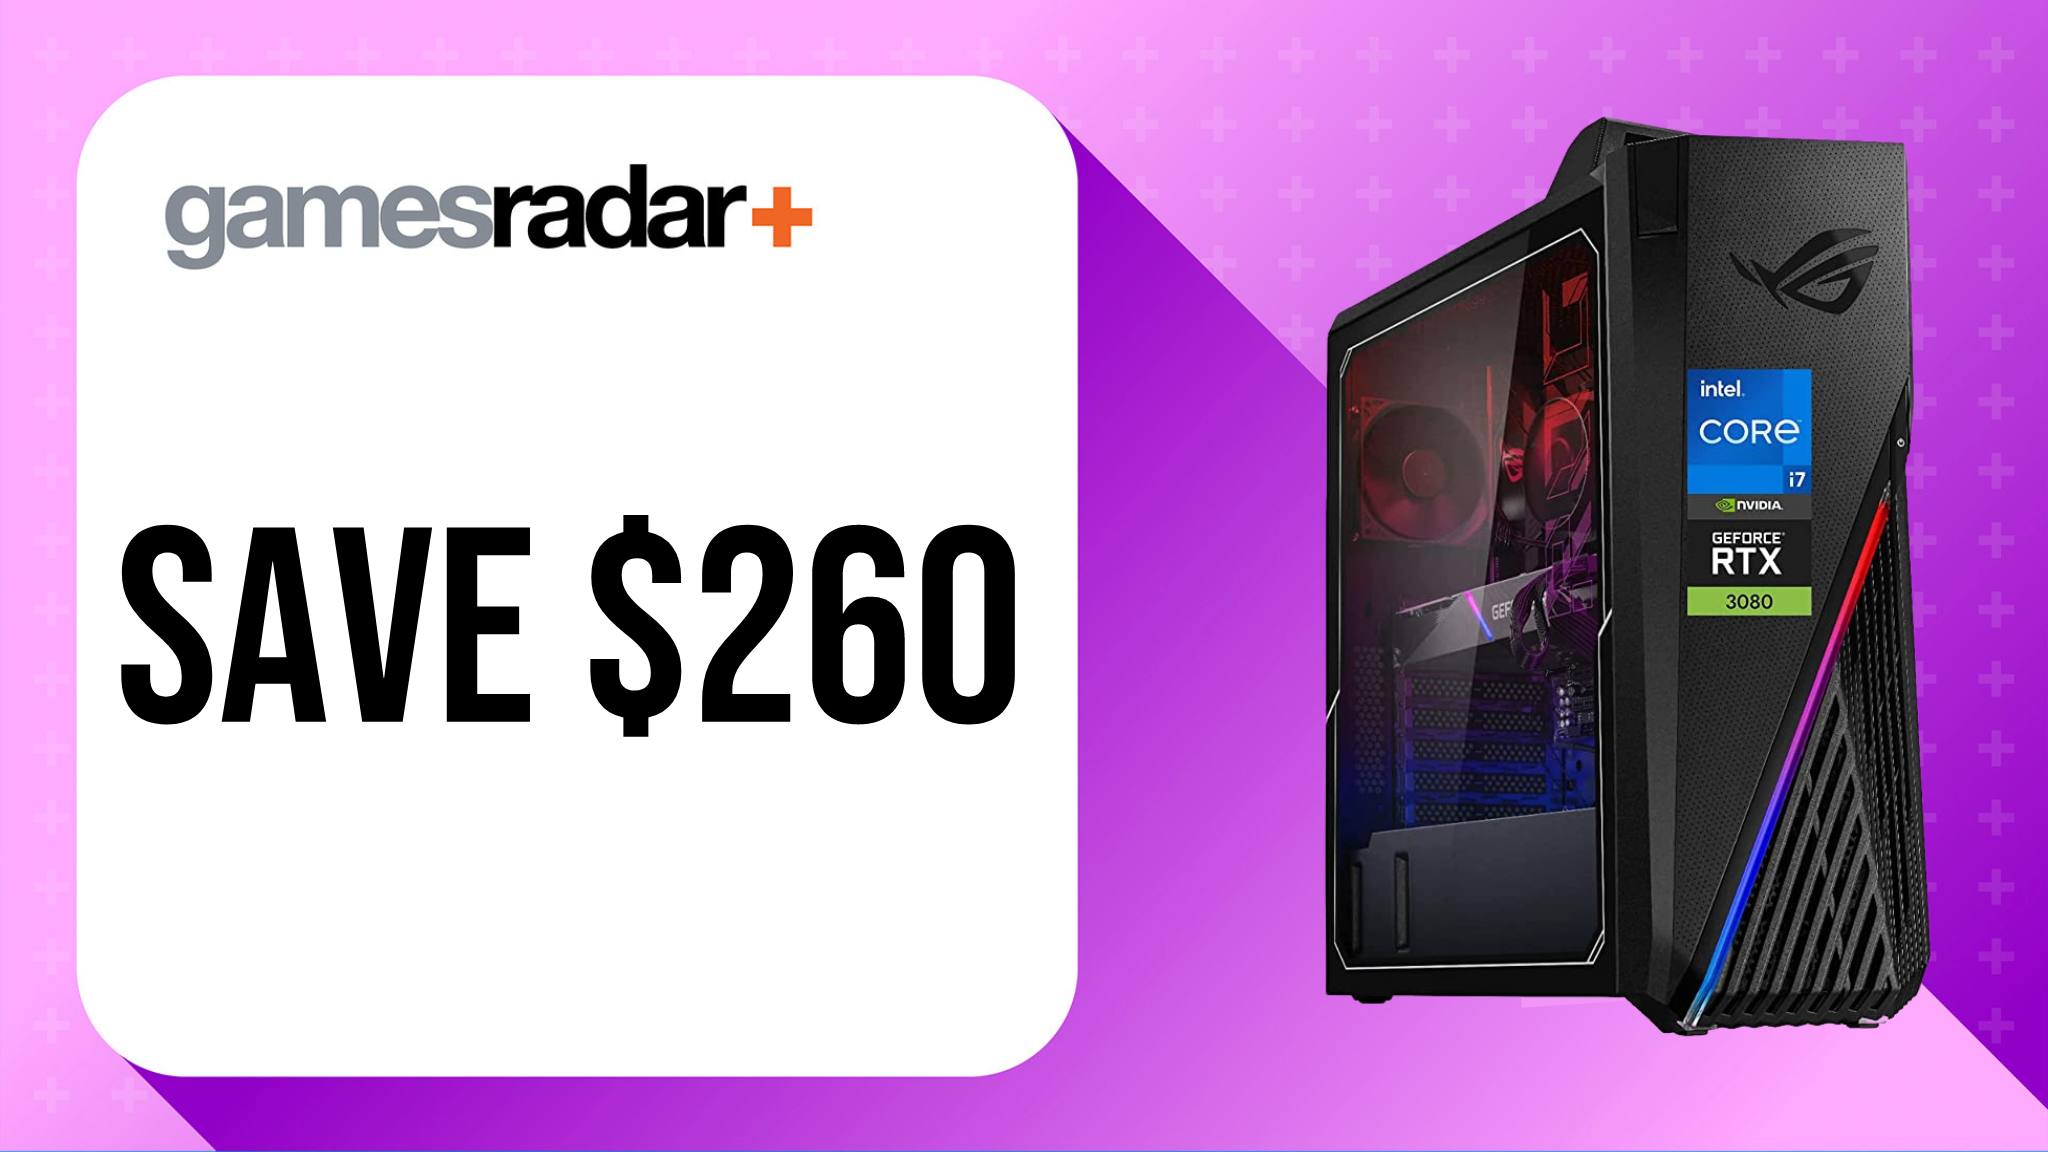 ASUS ROG Strix Gaming Desktop deal image with $260 saving stamp and purple background